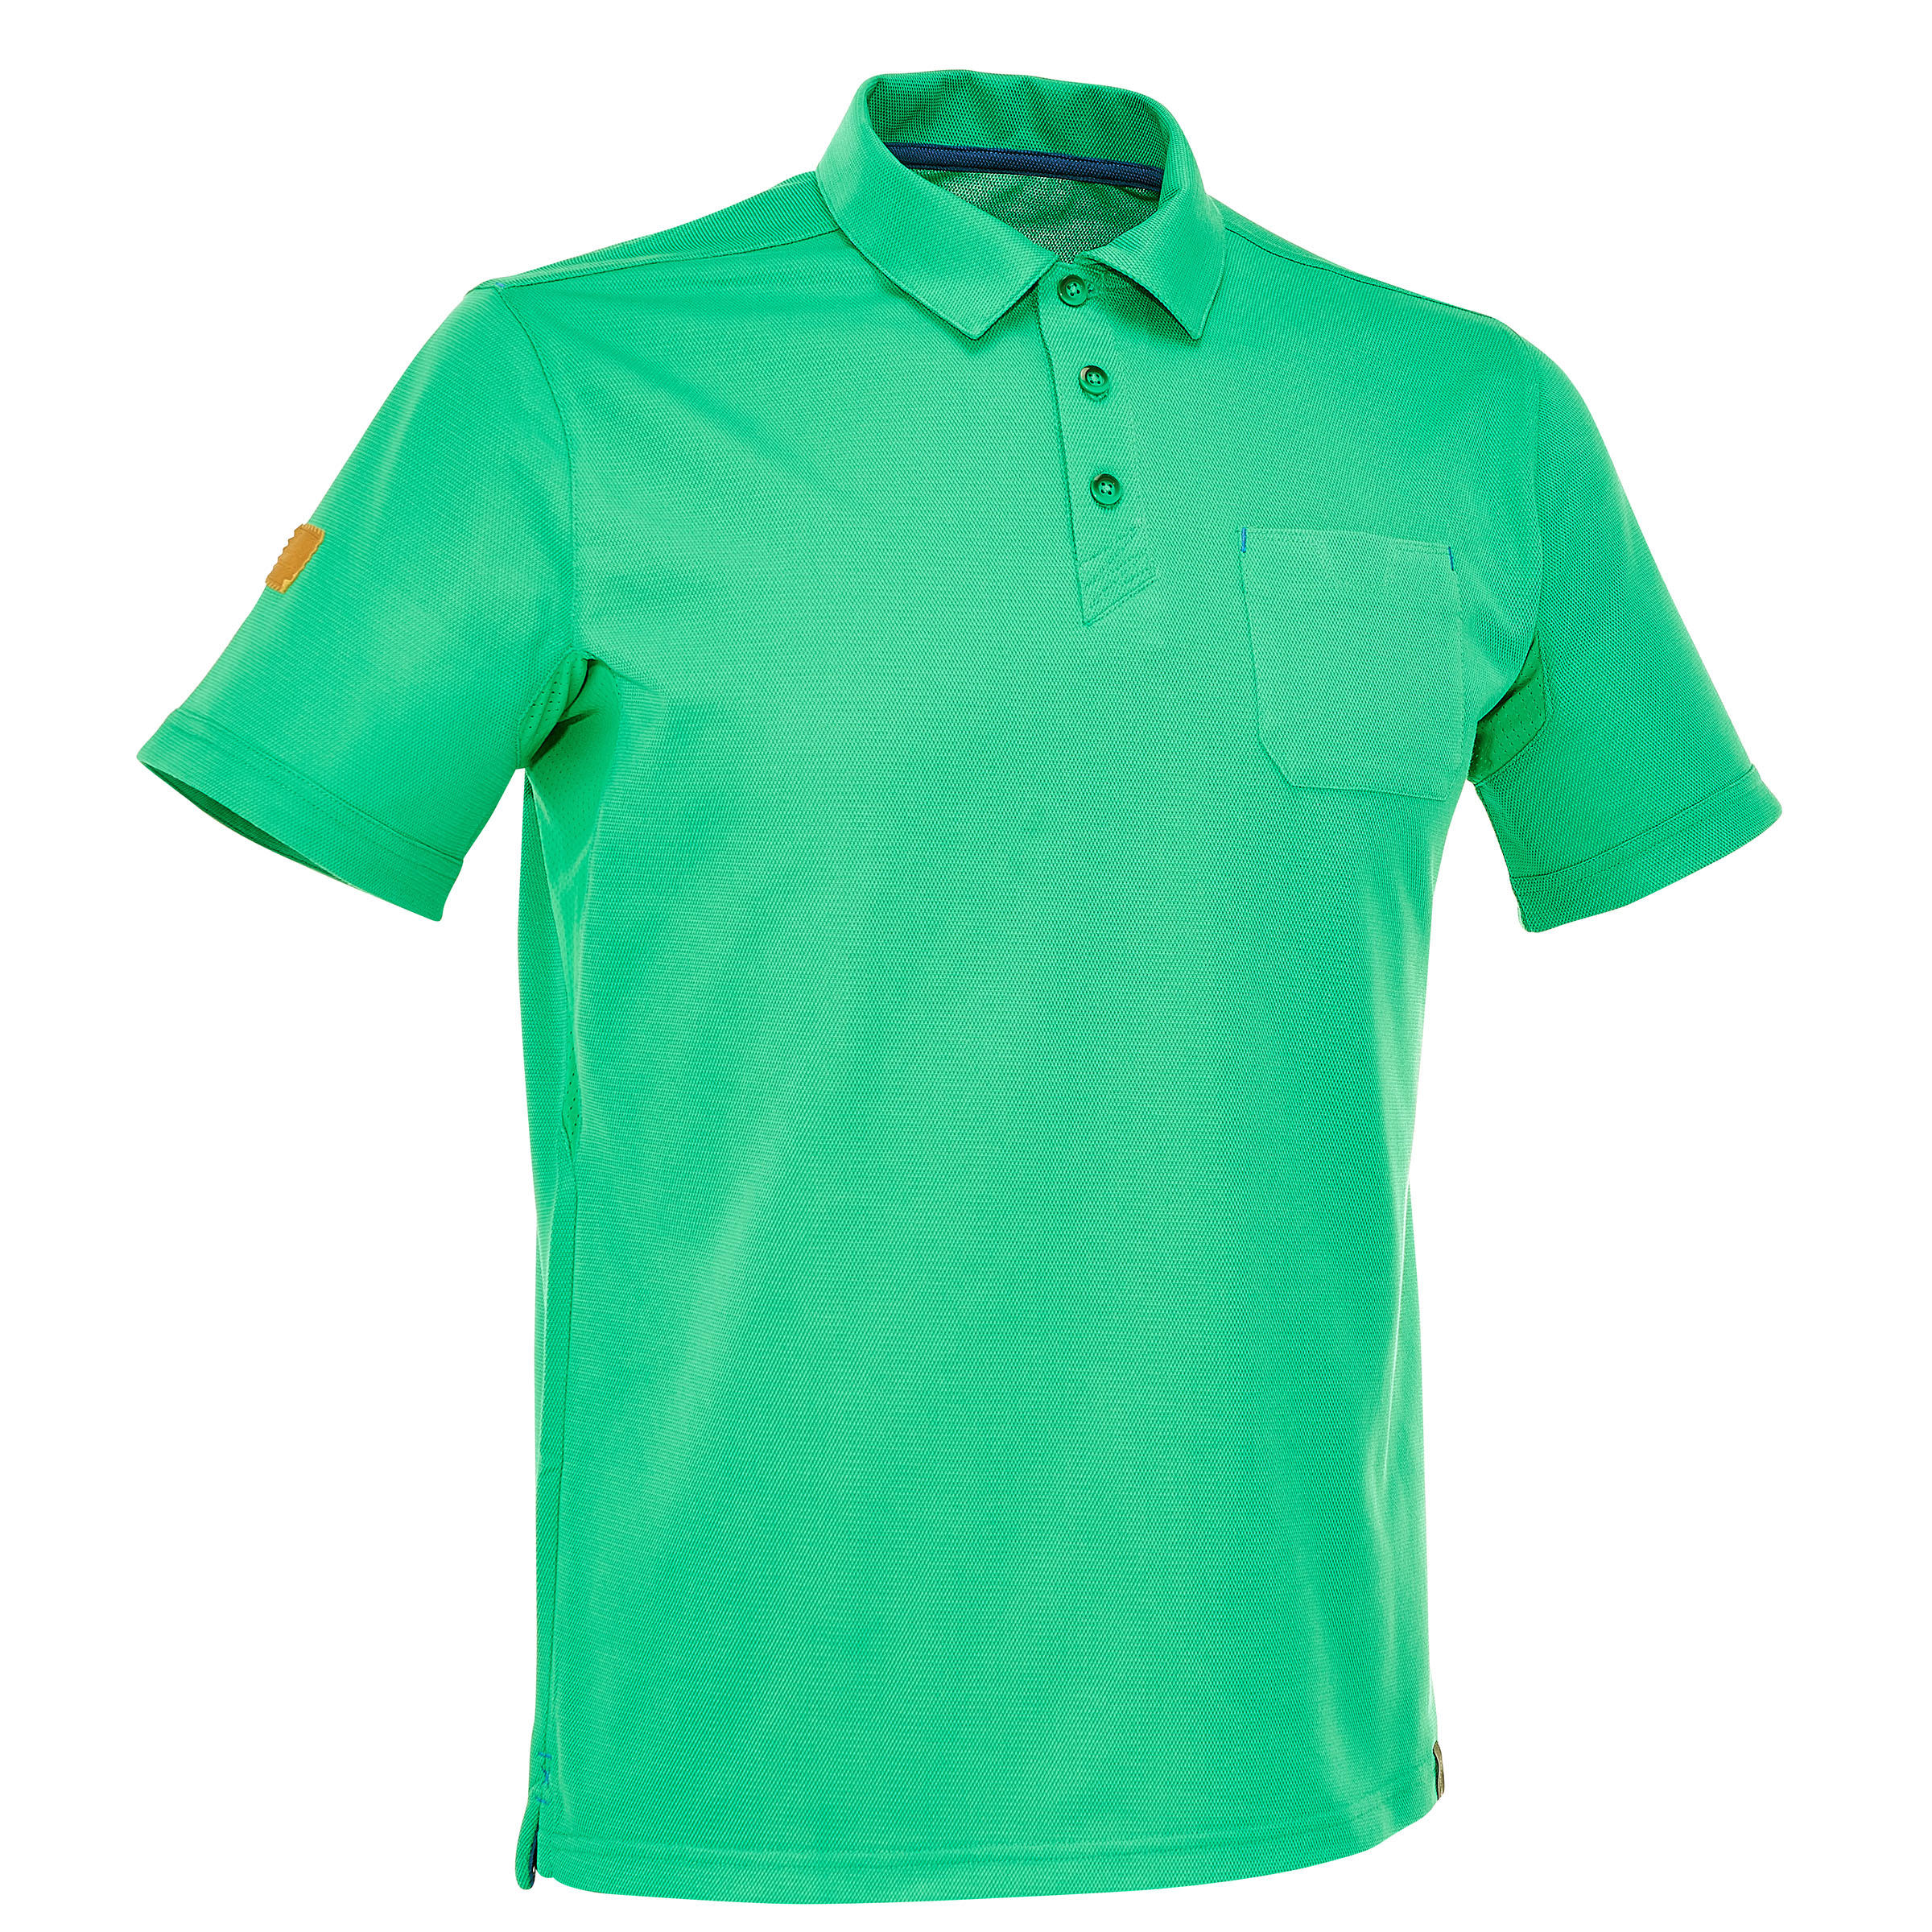 QUECHUA Arpenaz 500 Men's Hiking Polo Shirt - Green